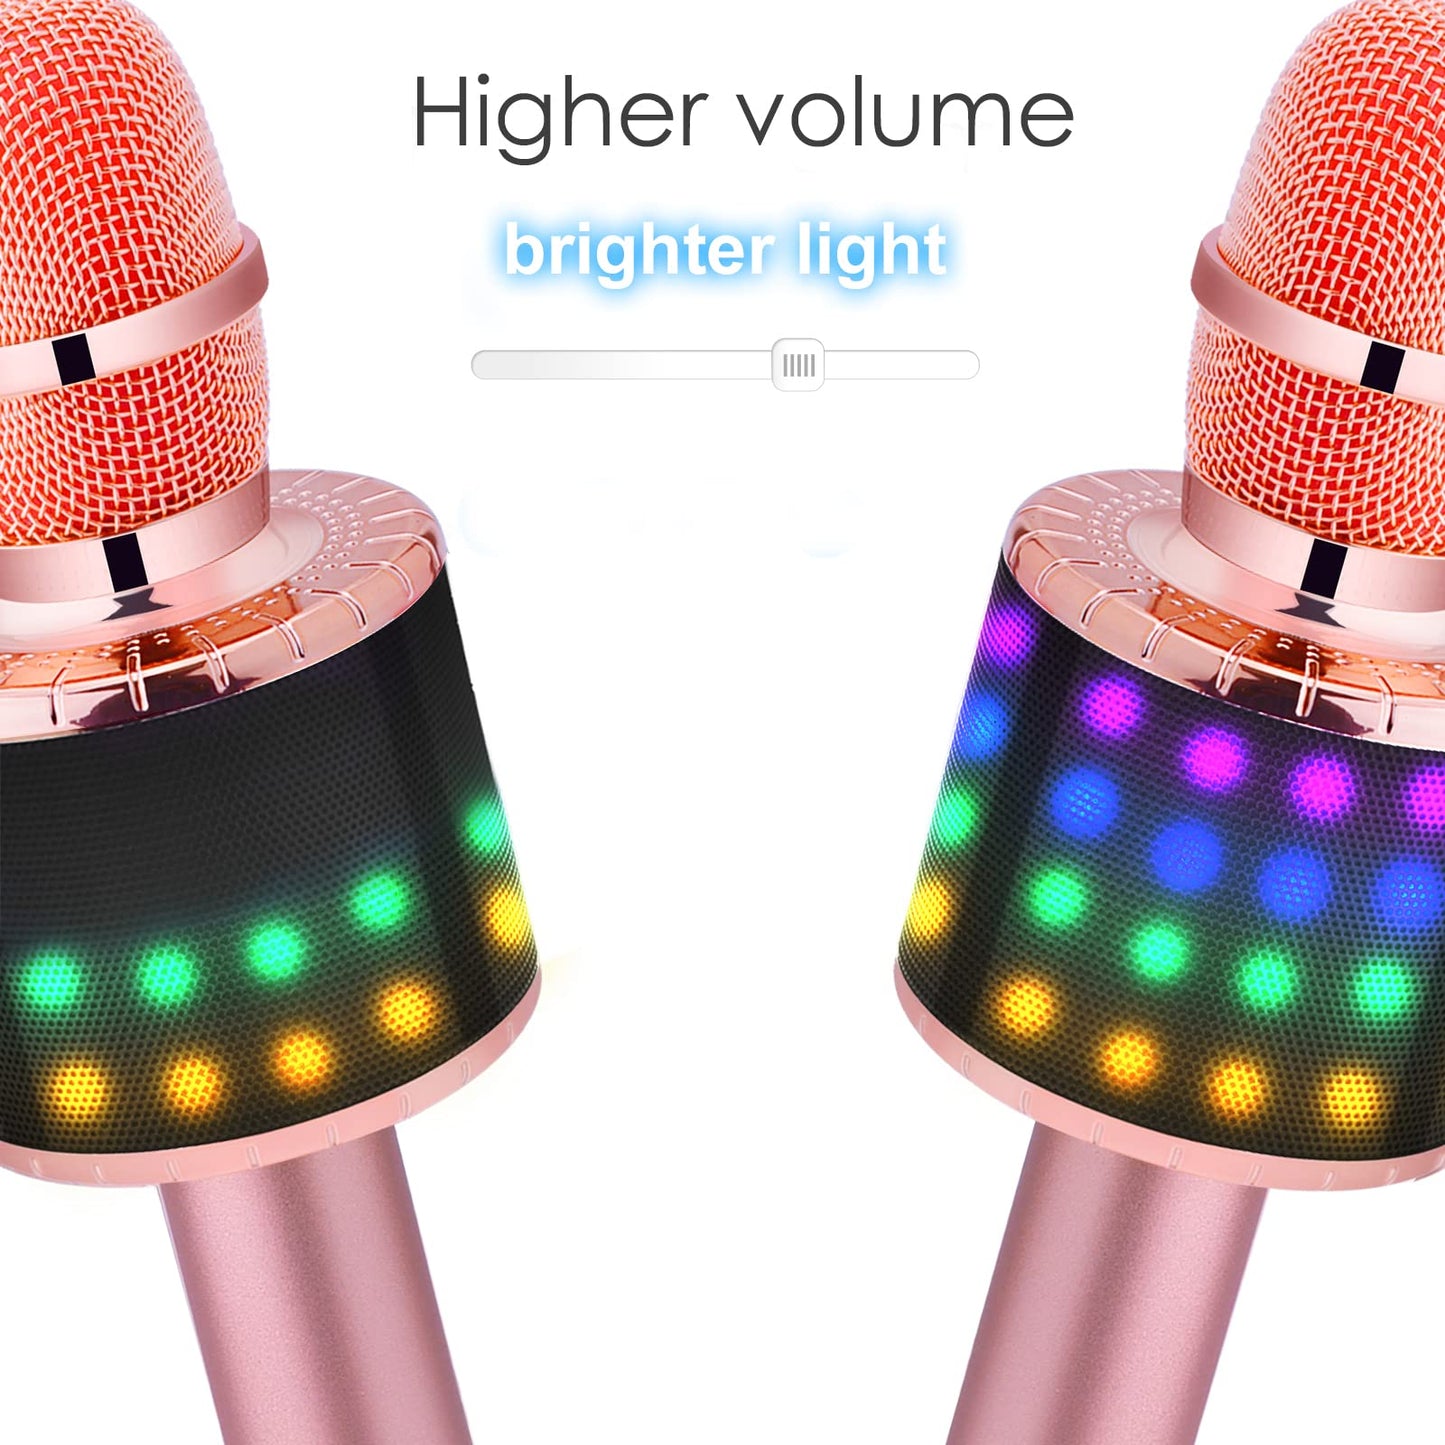 BONAOK Wireless Bluetooth Karaoke Microphone Speaker Machine - w/ Controllable LED Lights – Birthday, Party, Works w/ Smartphones (Rose Gold)